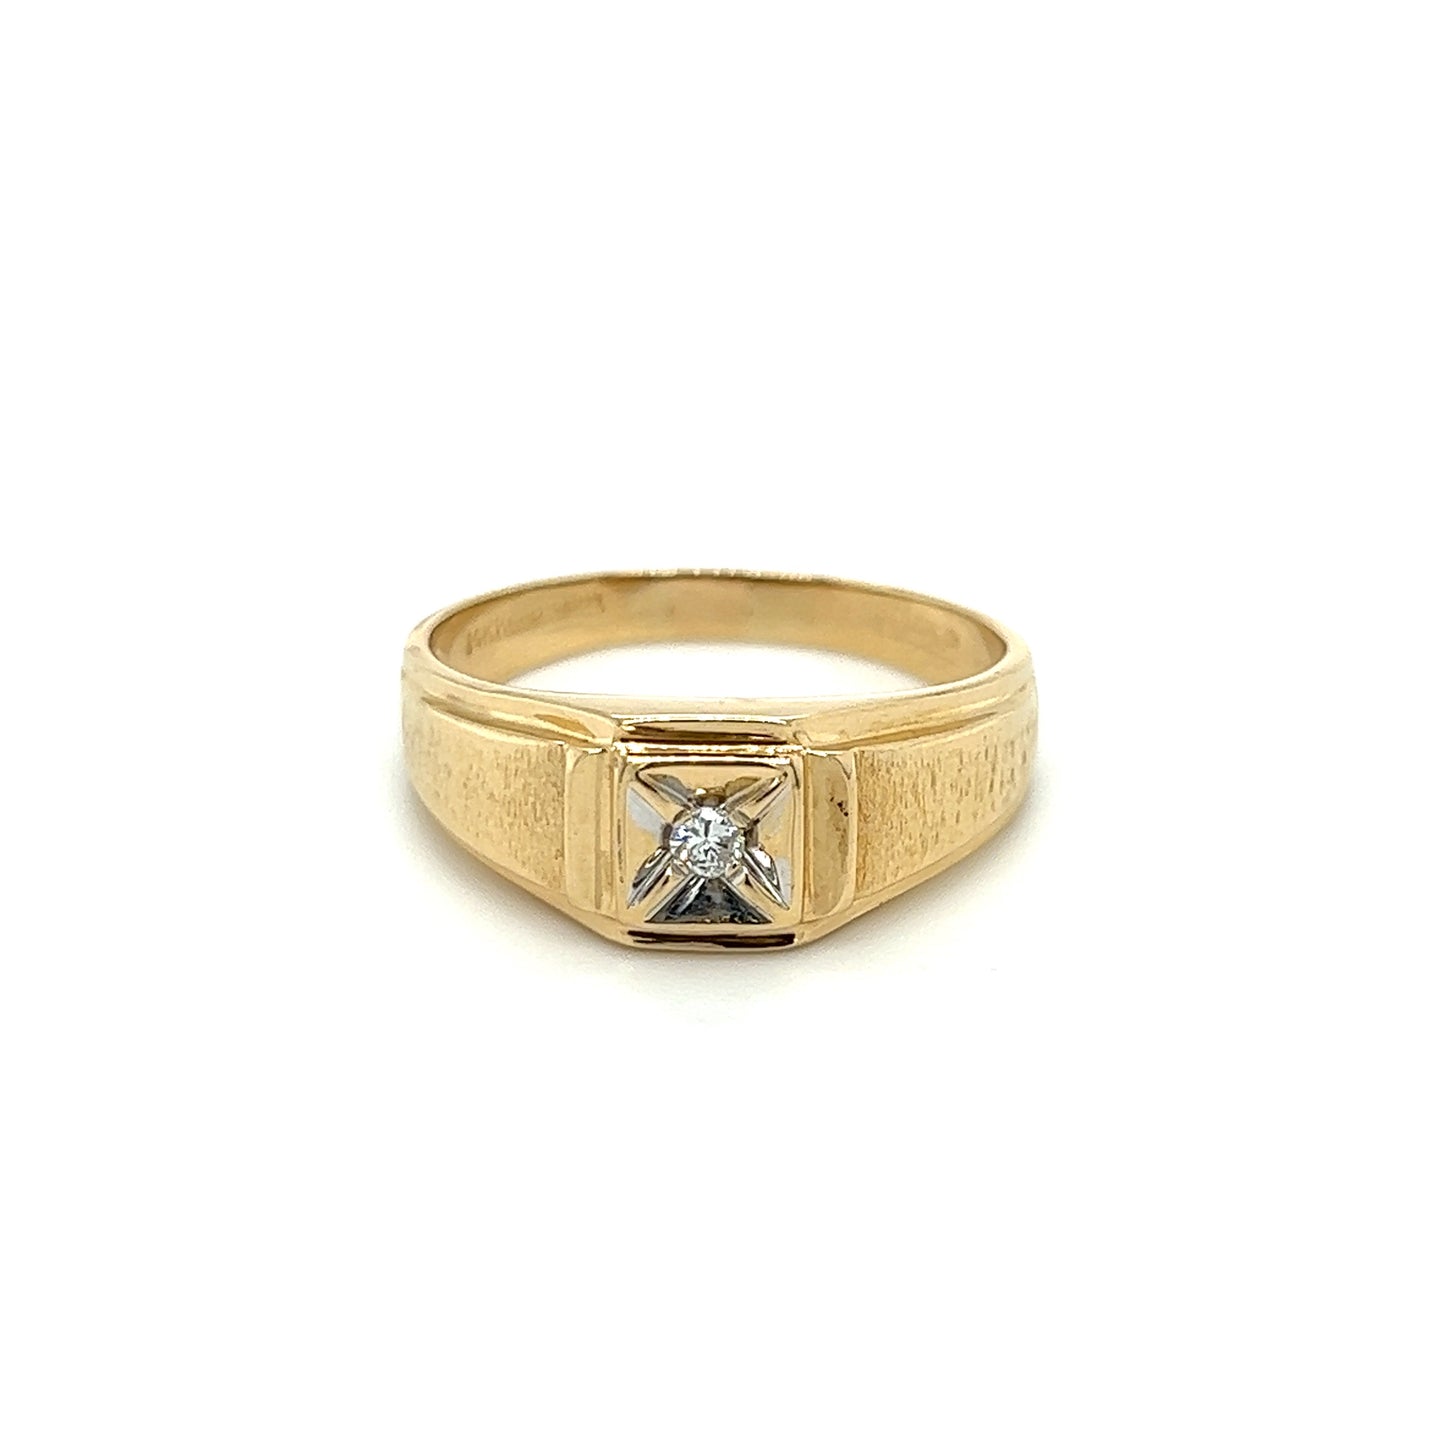 14K Yellow Gold Men's Diamond Fashion Ring .15ctw 4.4g